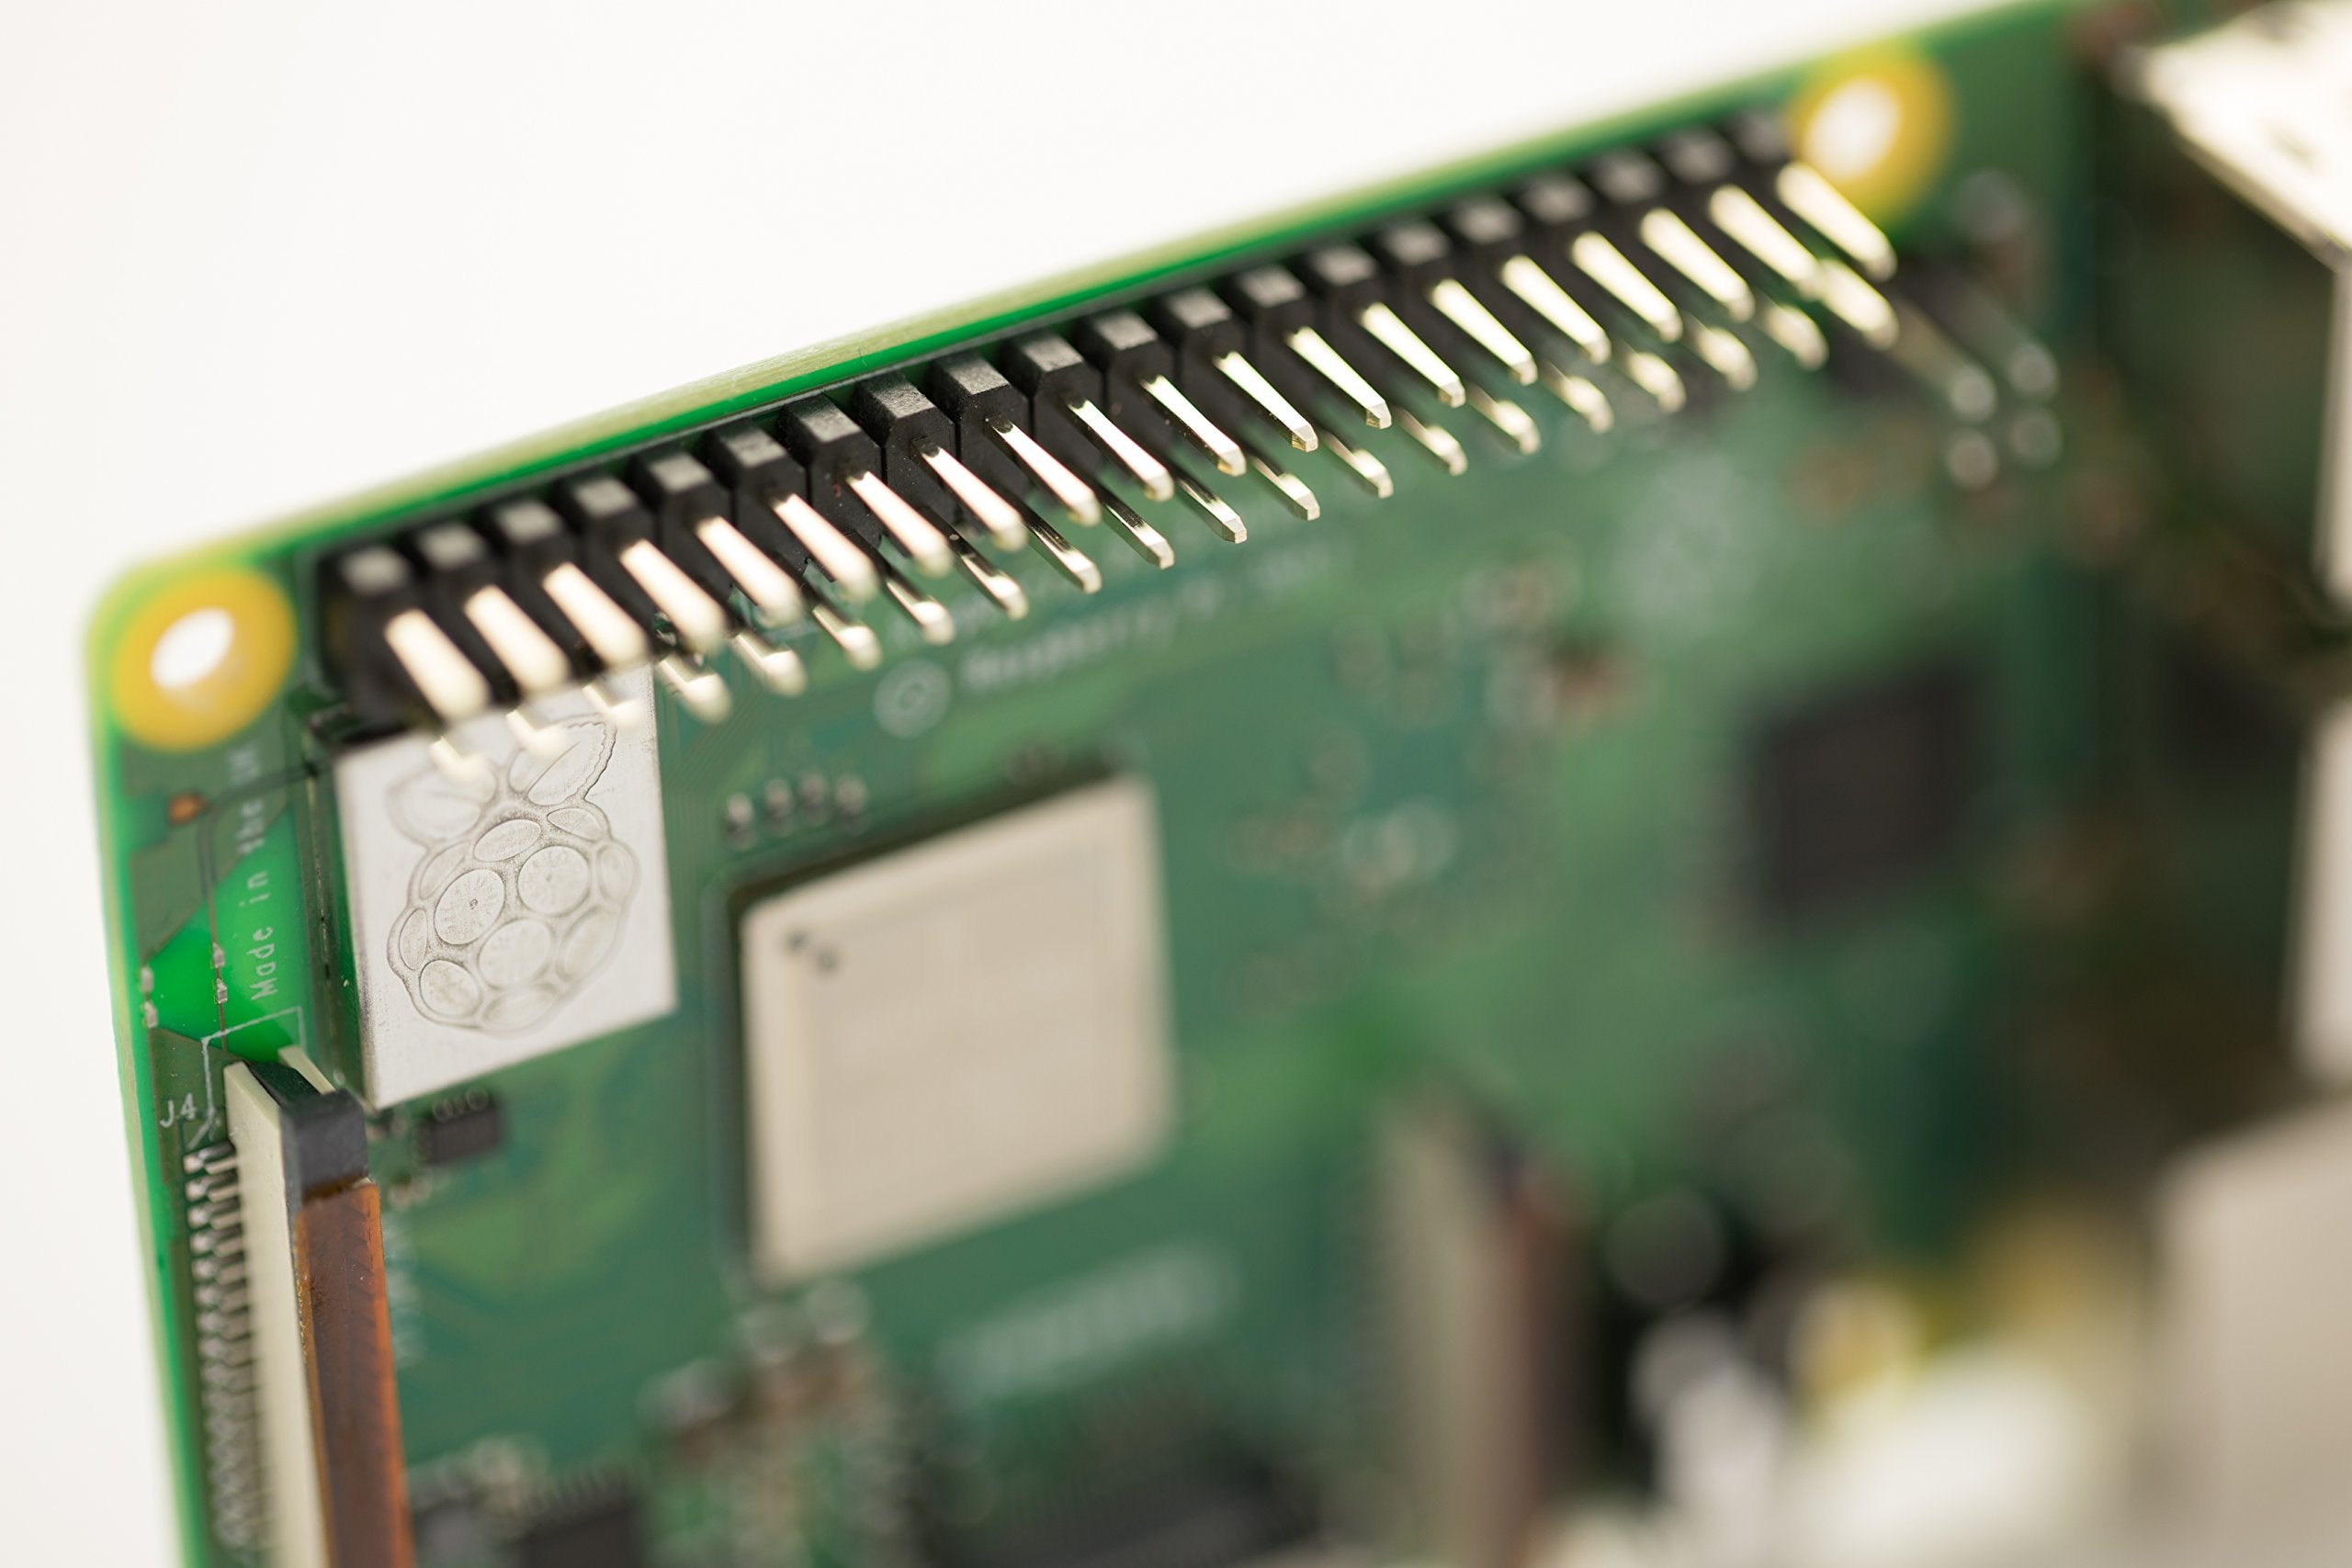 Raspberry Pi 3 Model B+ Motherboard, 1GB, 1.4GHz ARM CPU